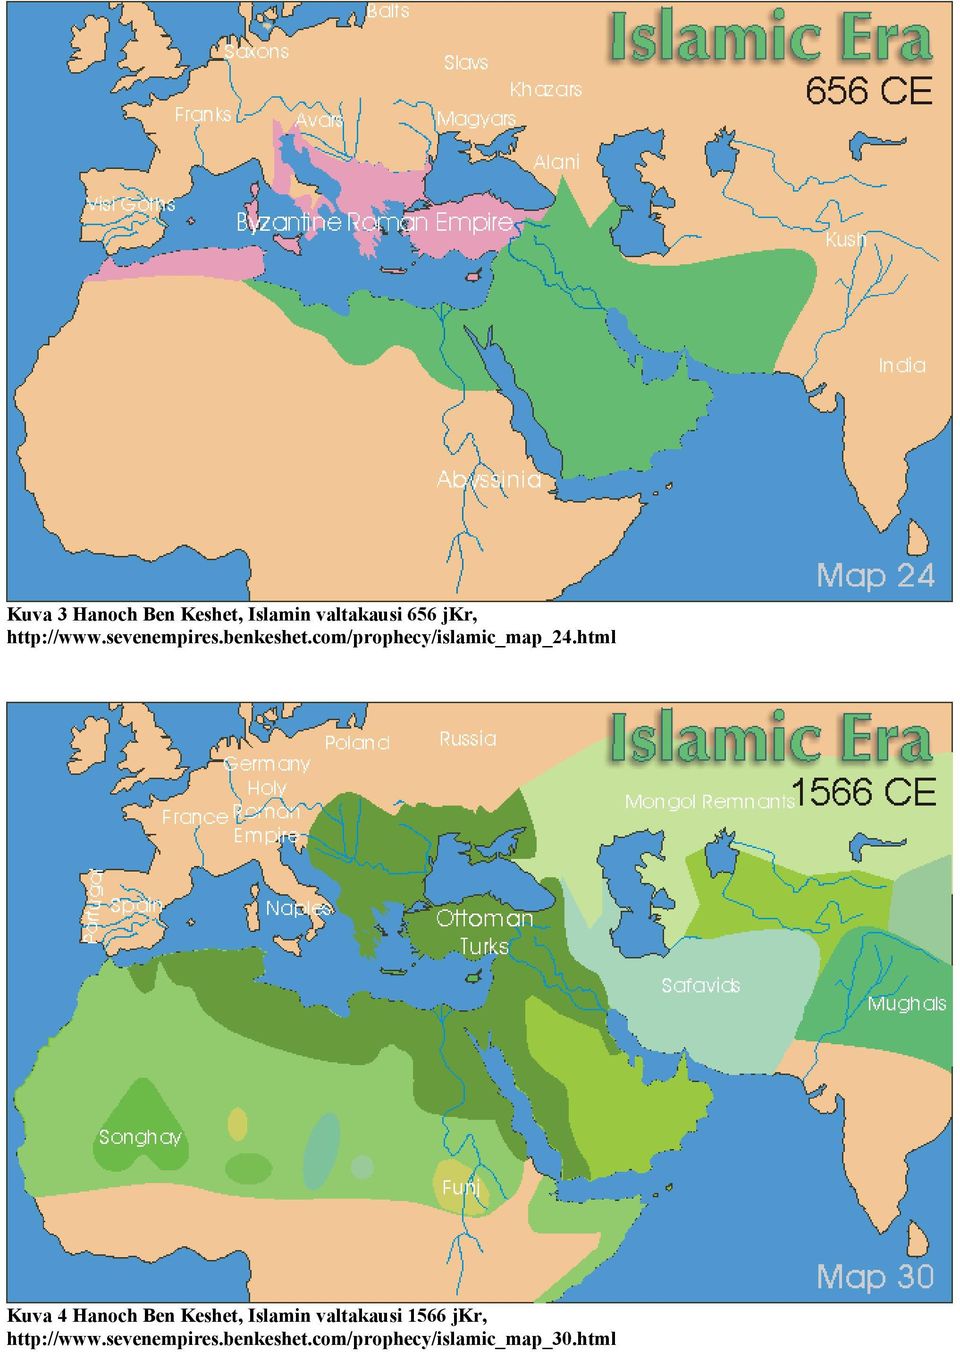 com/prophecy/islamic_map_24.